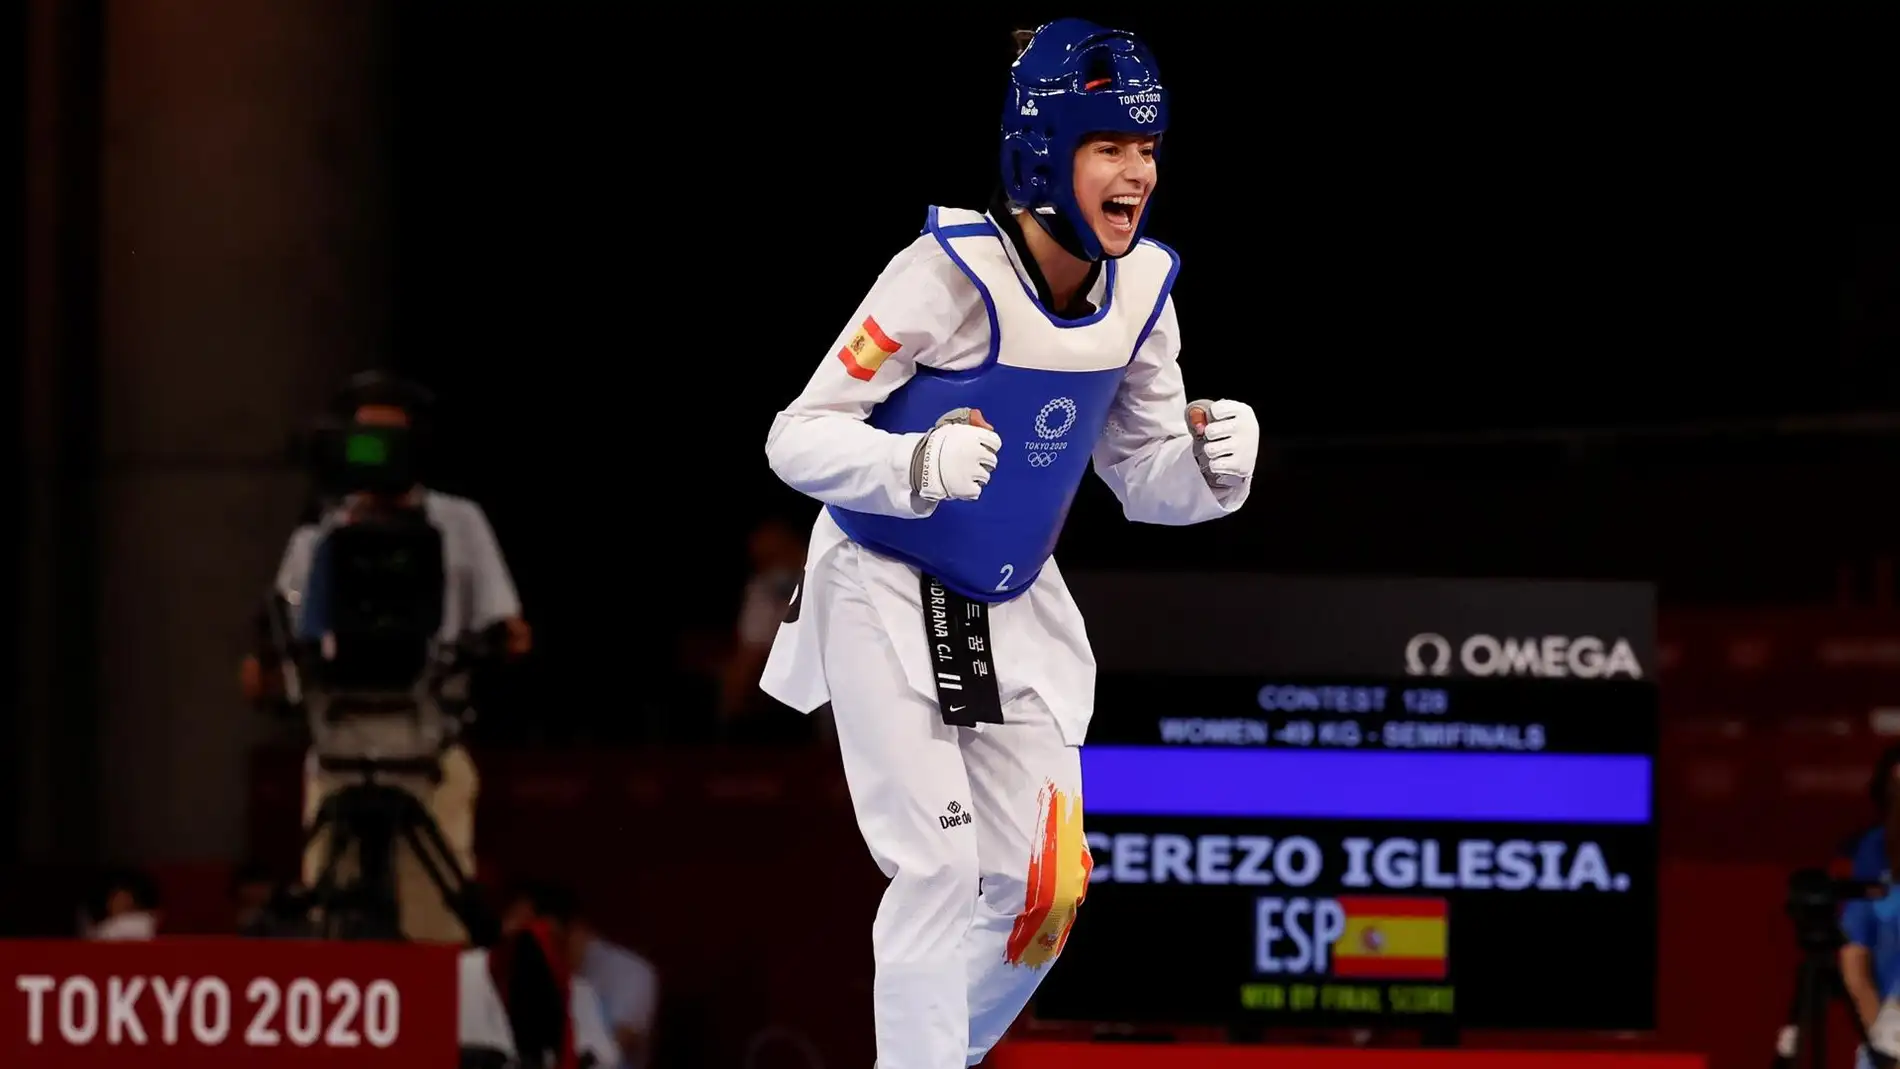 La española Adriana Cerezo Iglesias | Taekwondo